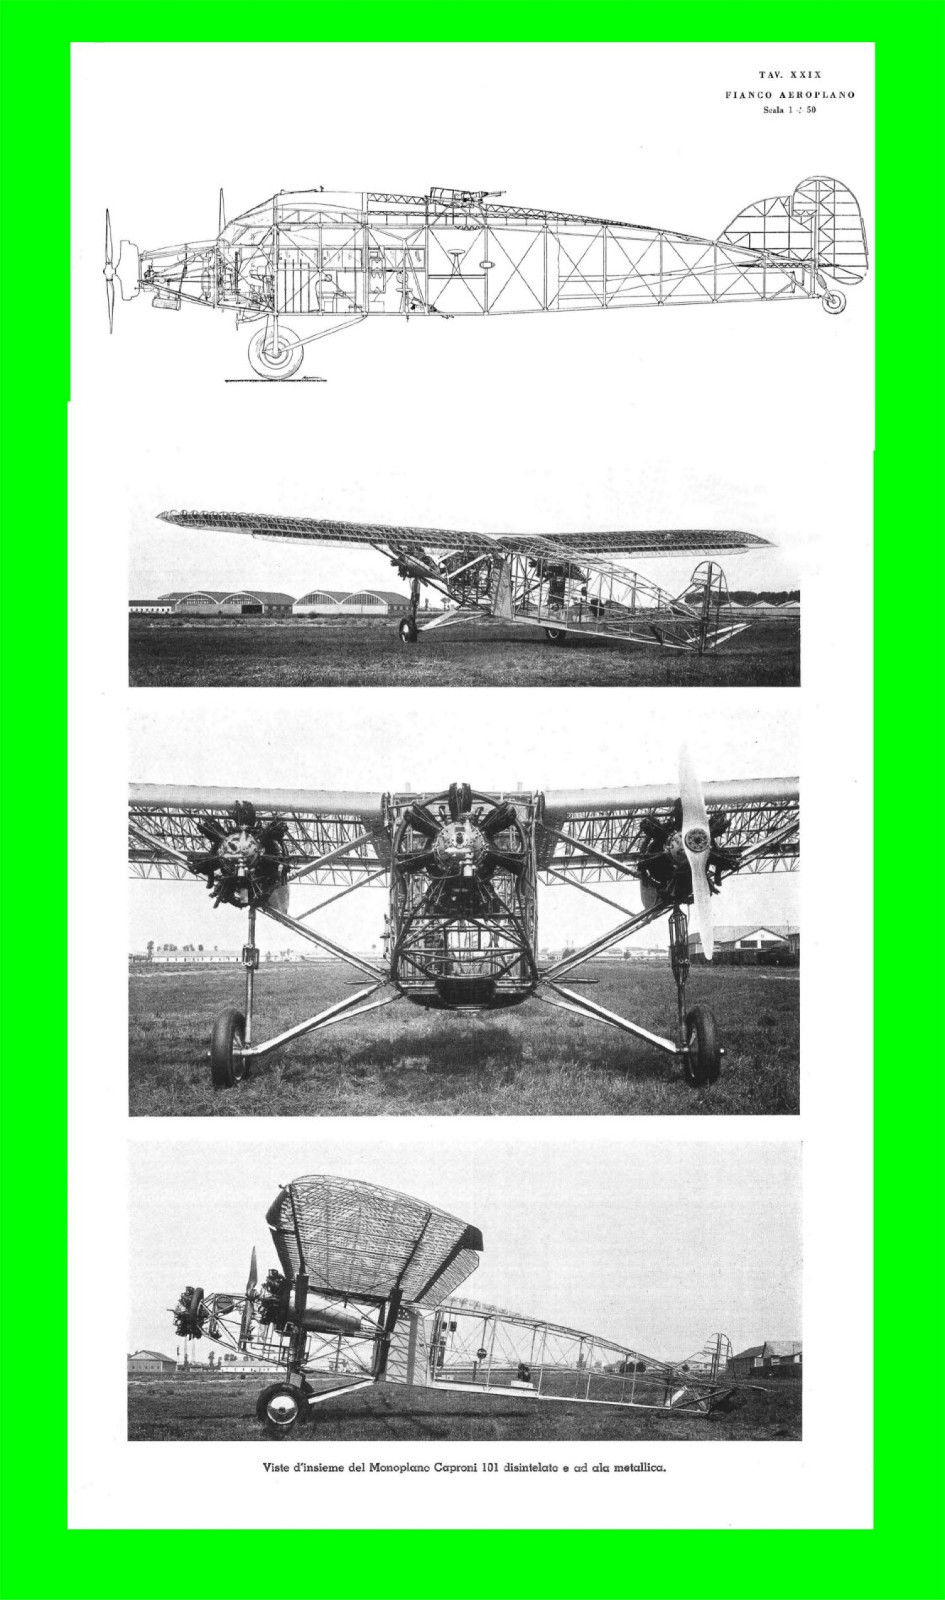 COLLECTION - CAPRONI Ca101  AERONAUTICA AIRCRAFT Manual - <b>DOWNLOAD</b>